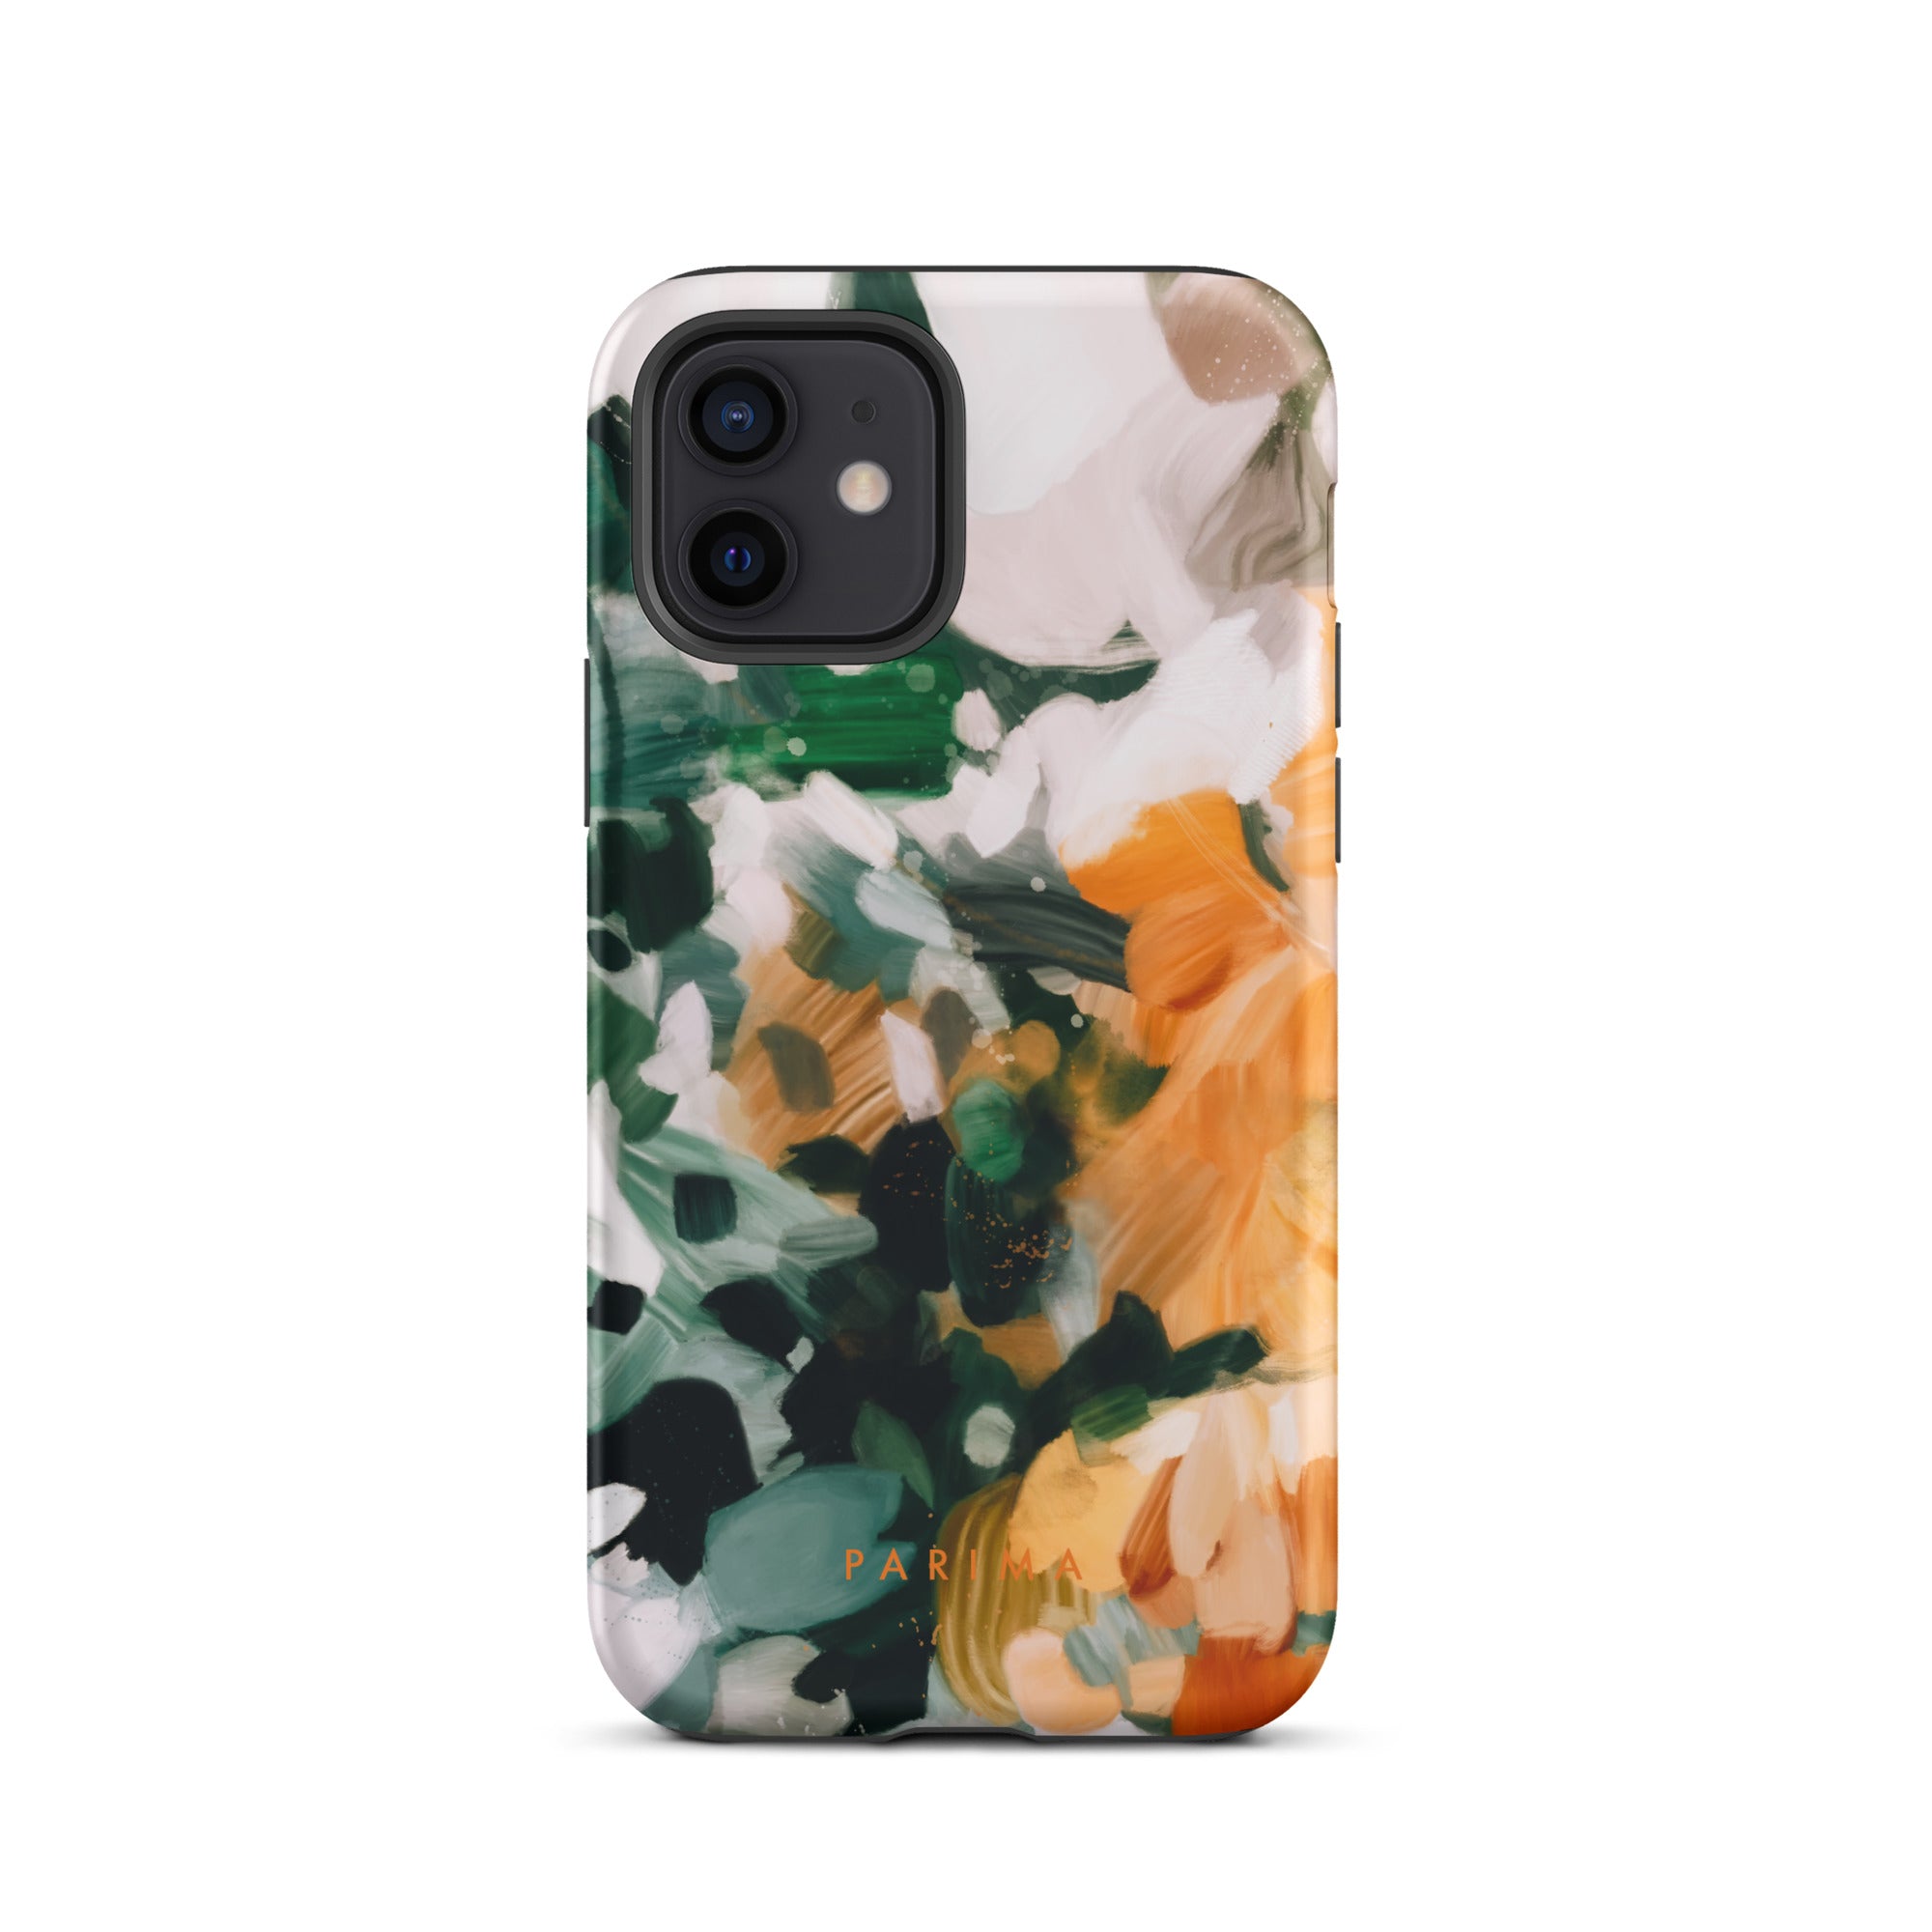 Aspen, green and orange abstract art - iPhone 12 tough case by Parima Studio